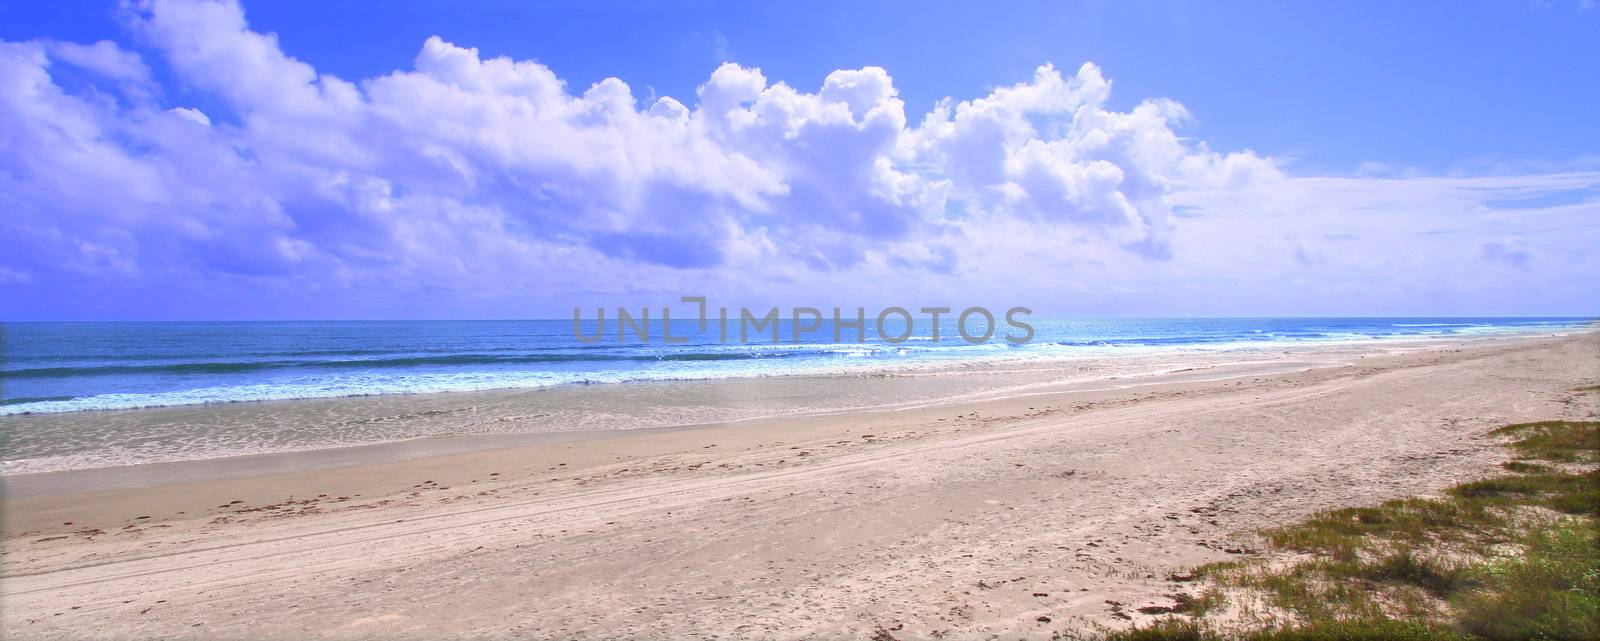 The amazing Ormond Beach along the east coast of Florida.